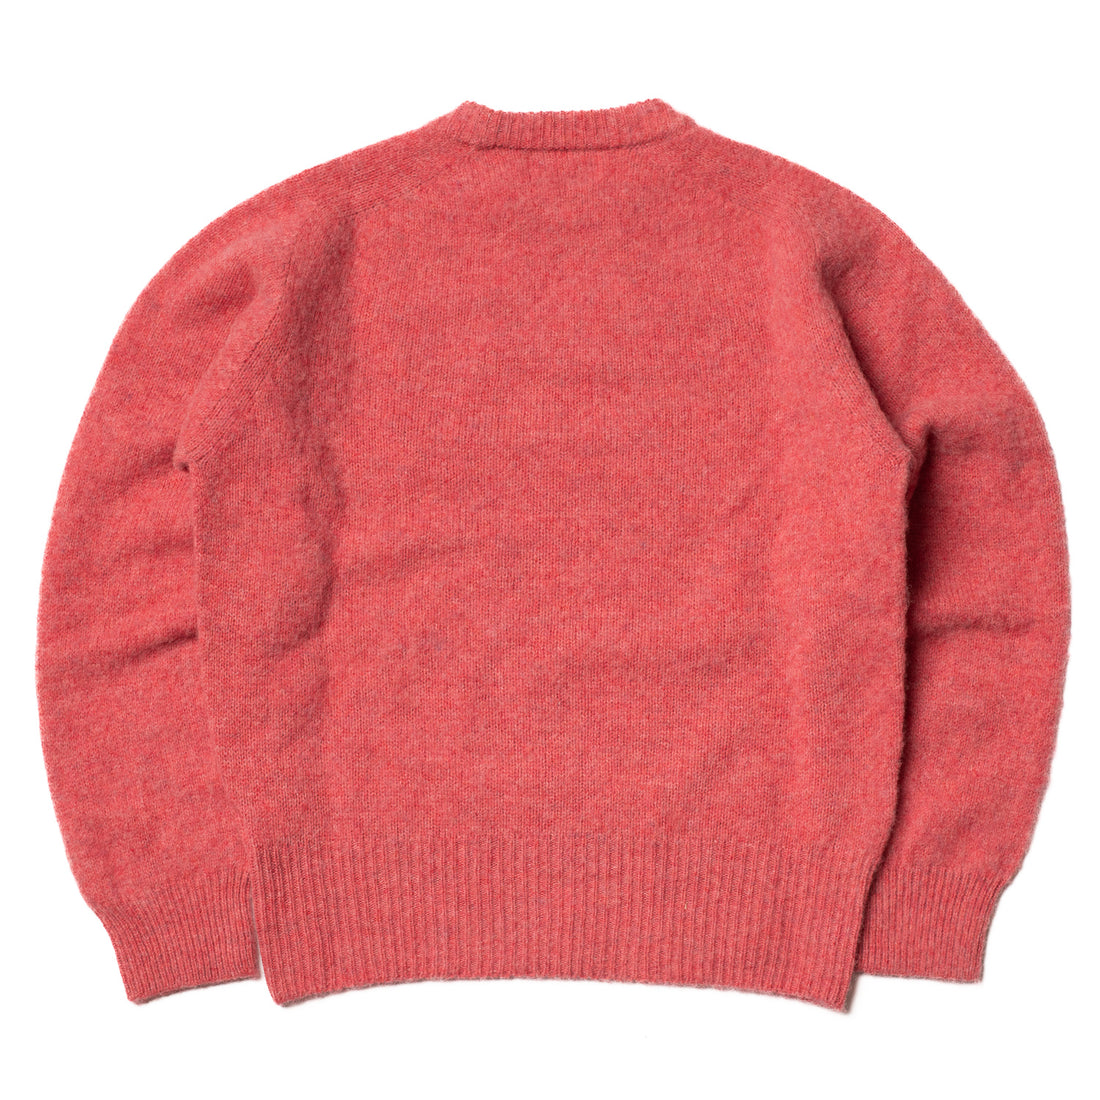 Bryceland's Shaggy Shetland Sweater Rose